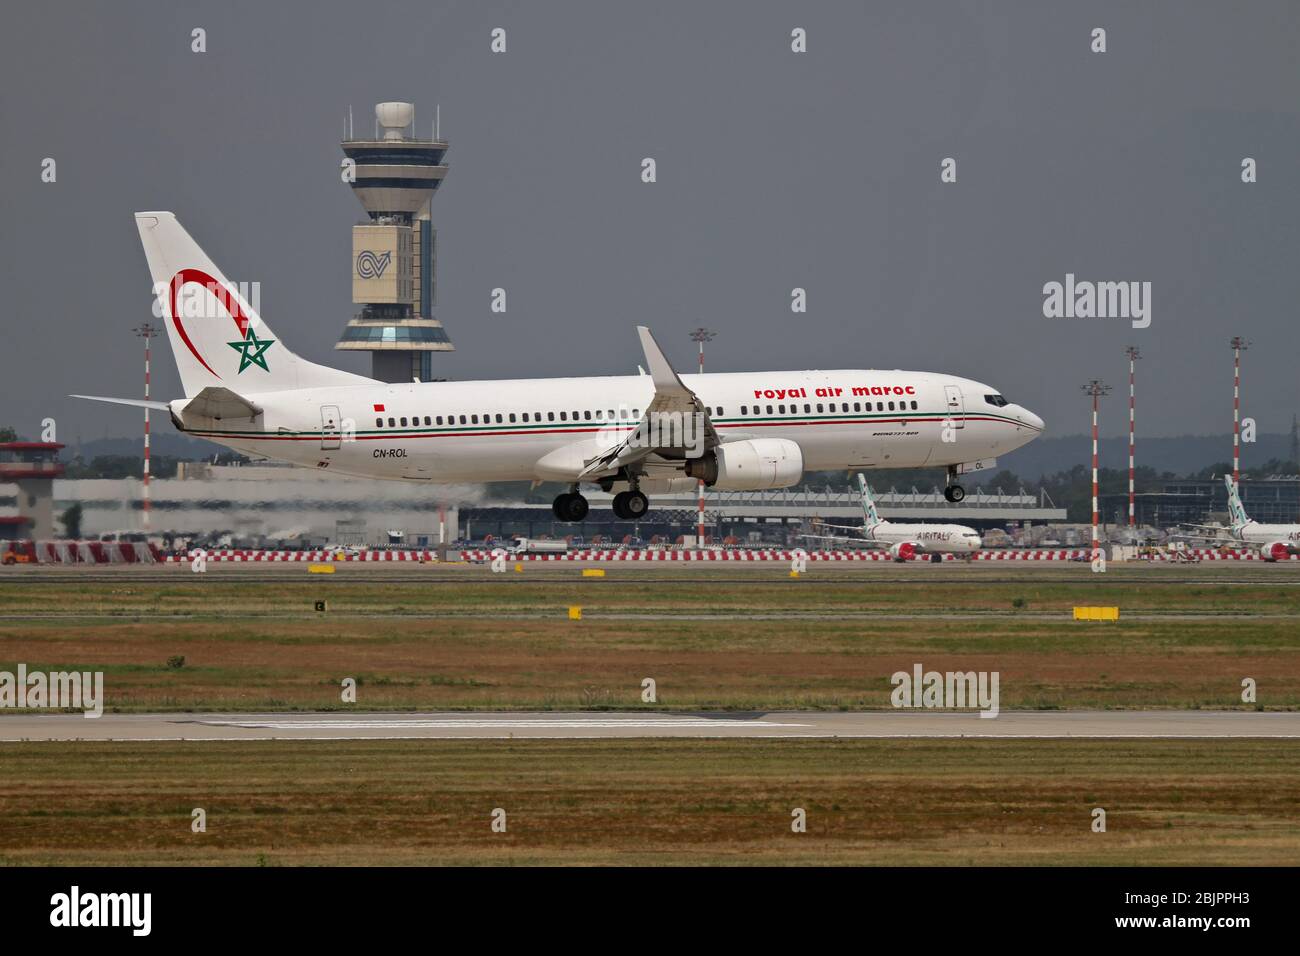 CN-ROL Royal Air Maroc (RAM), Boeing 737-8B6 bei Malpensa (MXP/LIMC), Mailand, Italien Stockfoto